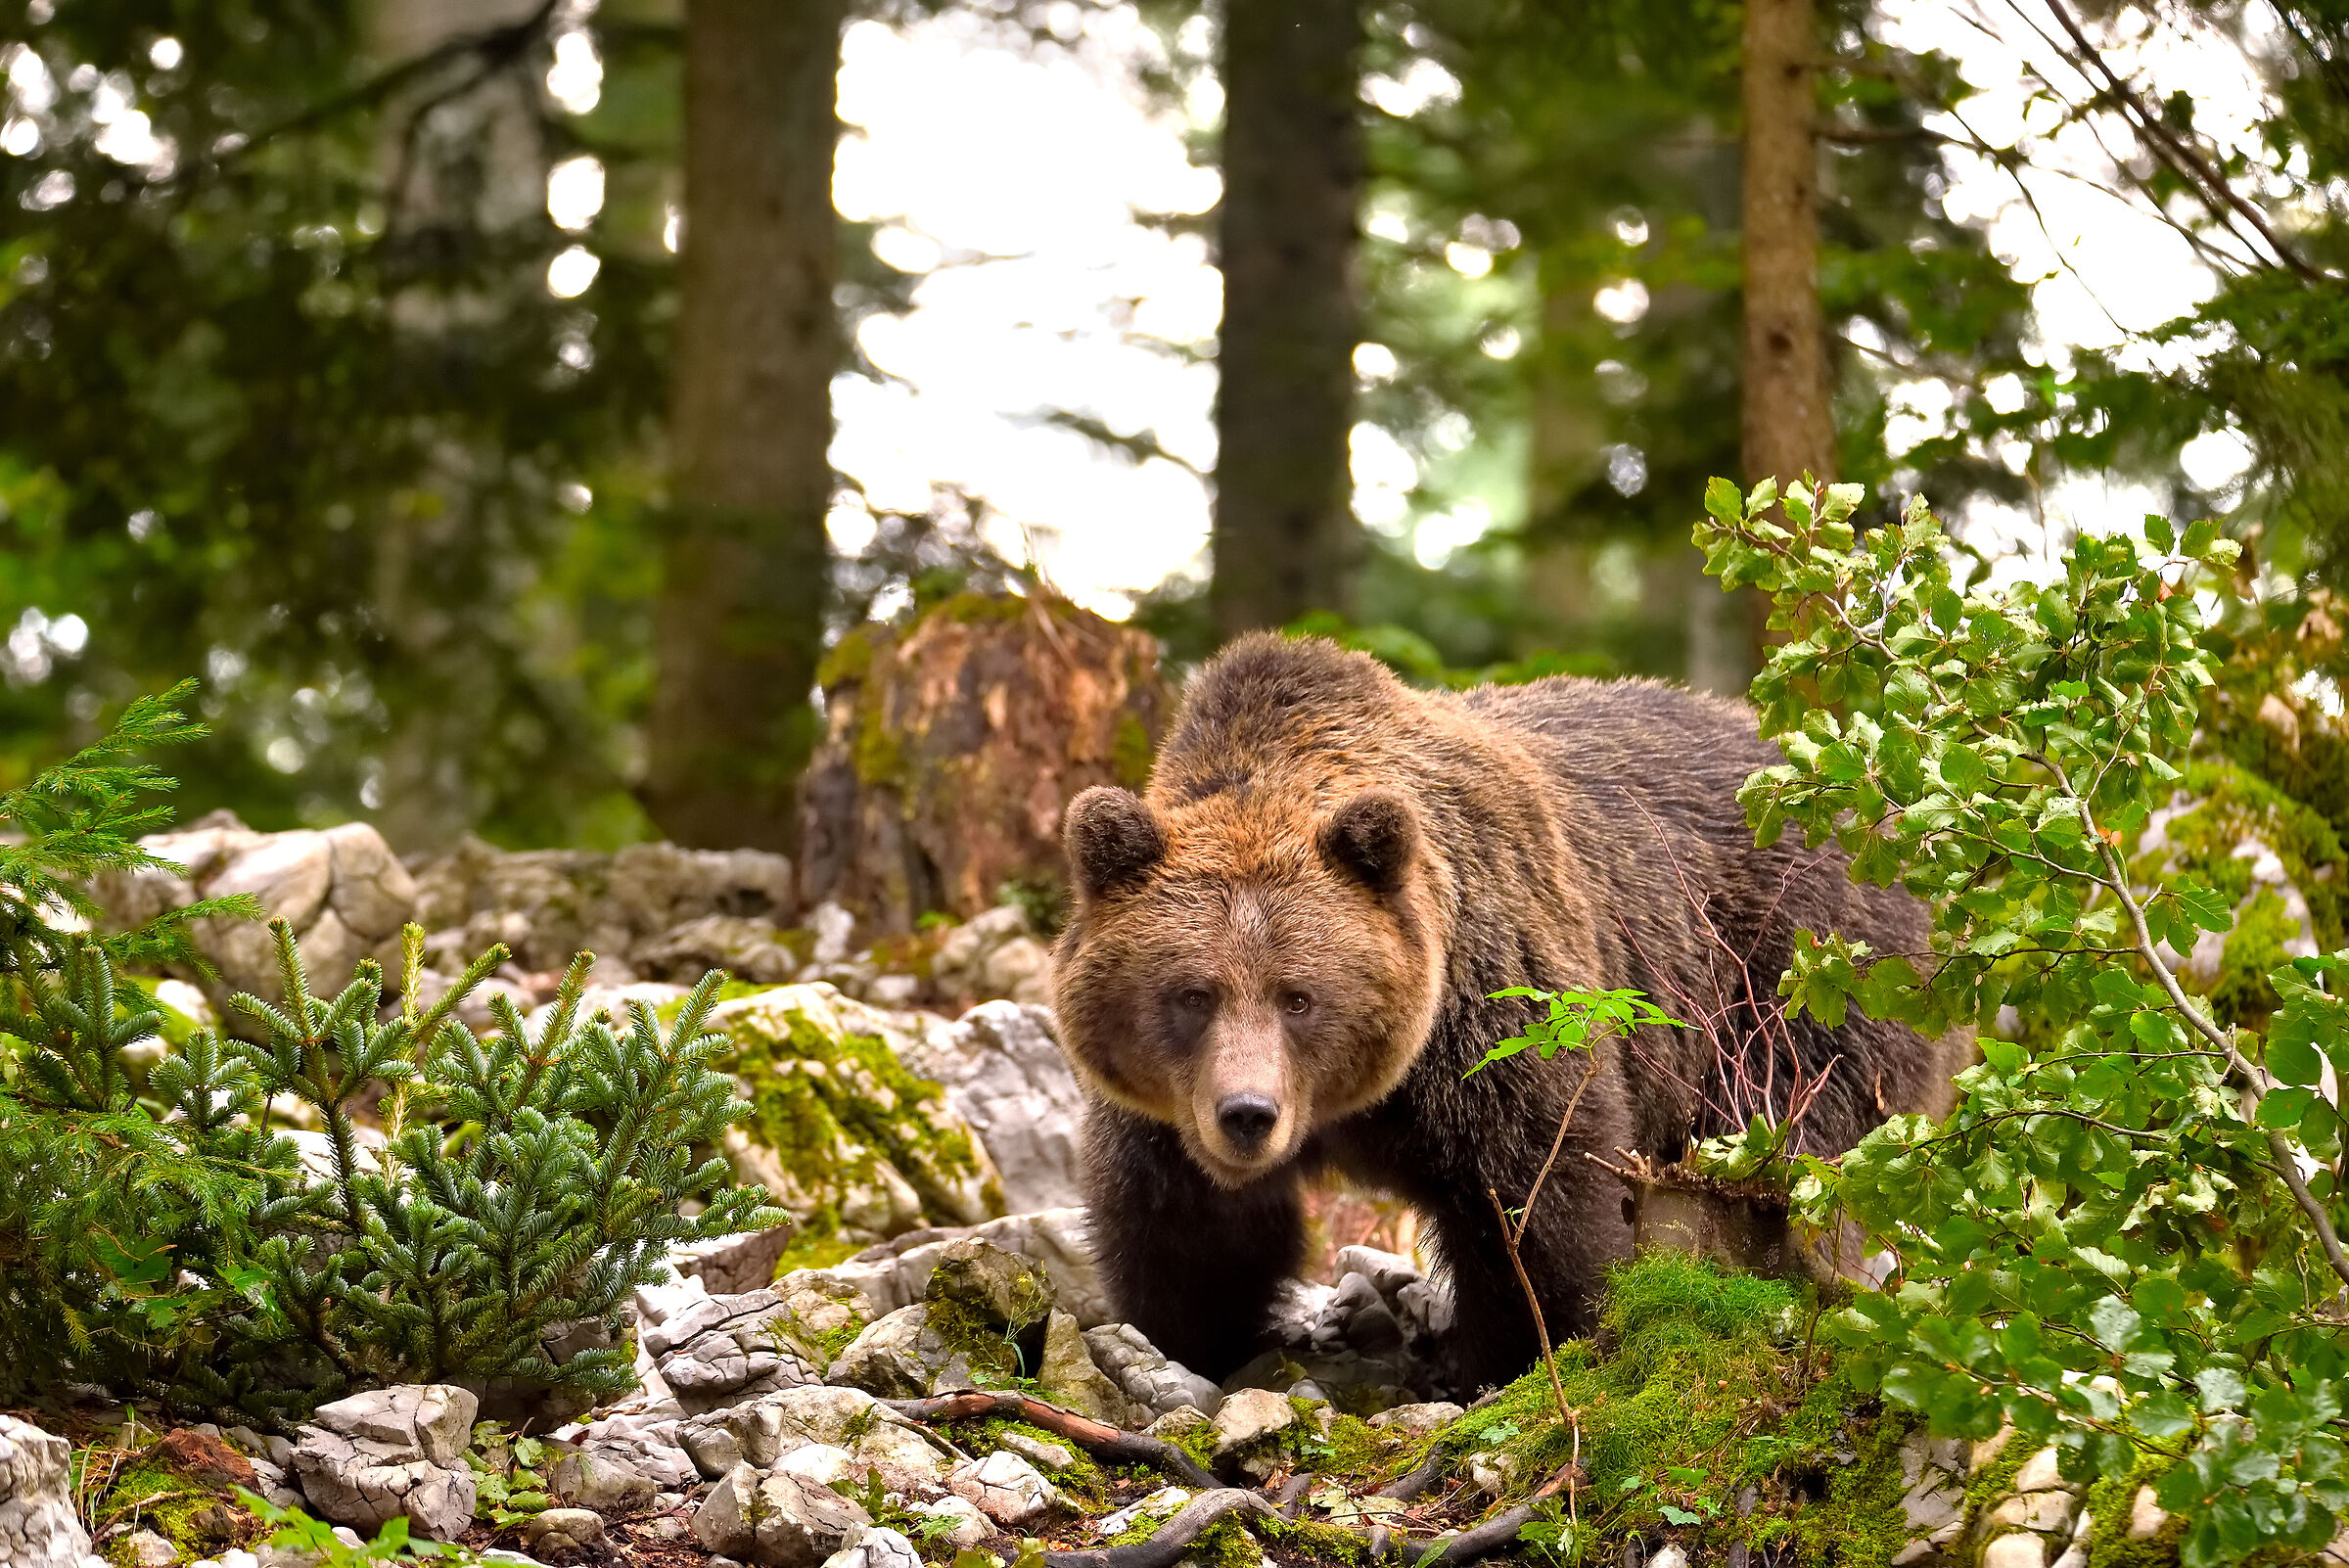 A European brown bear patrolling the area...